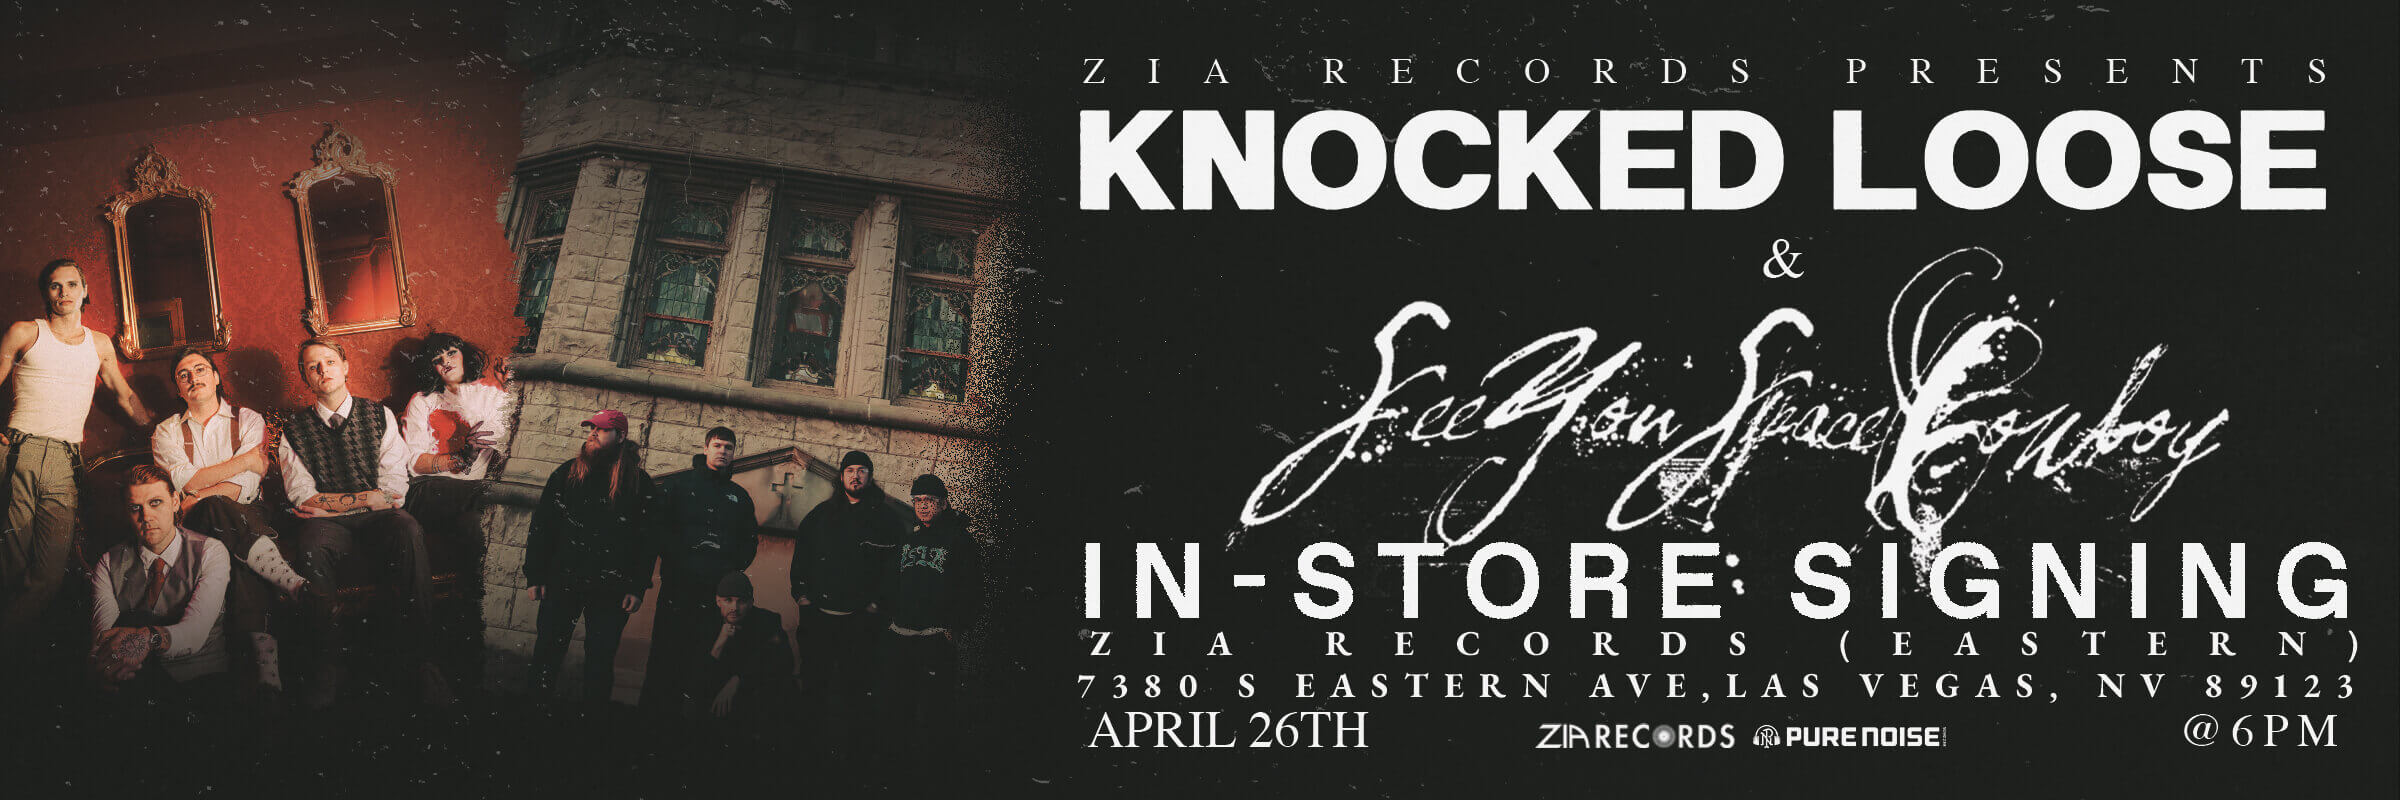 Knocked Loose and seeyouspacecowboy at Zia Records